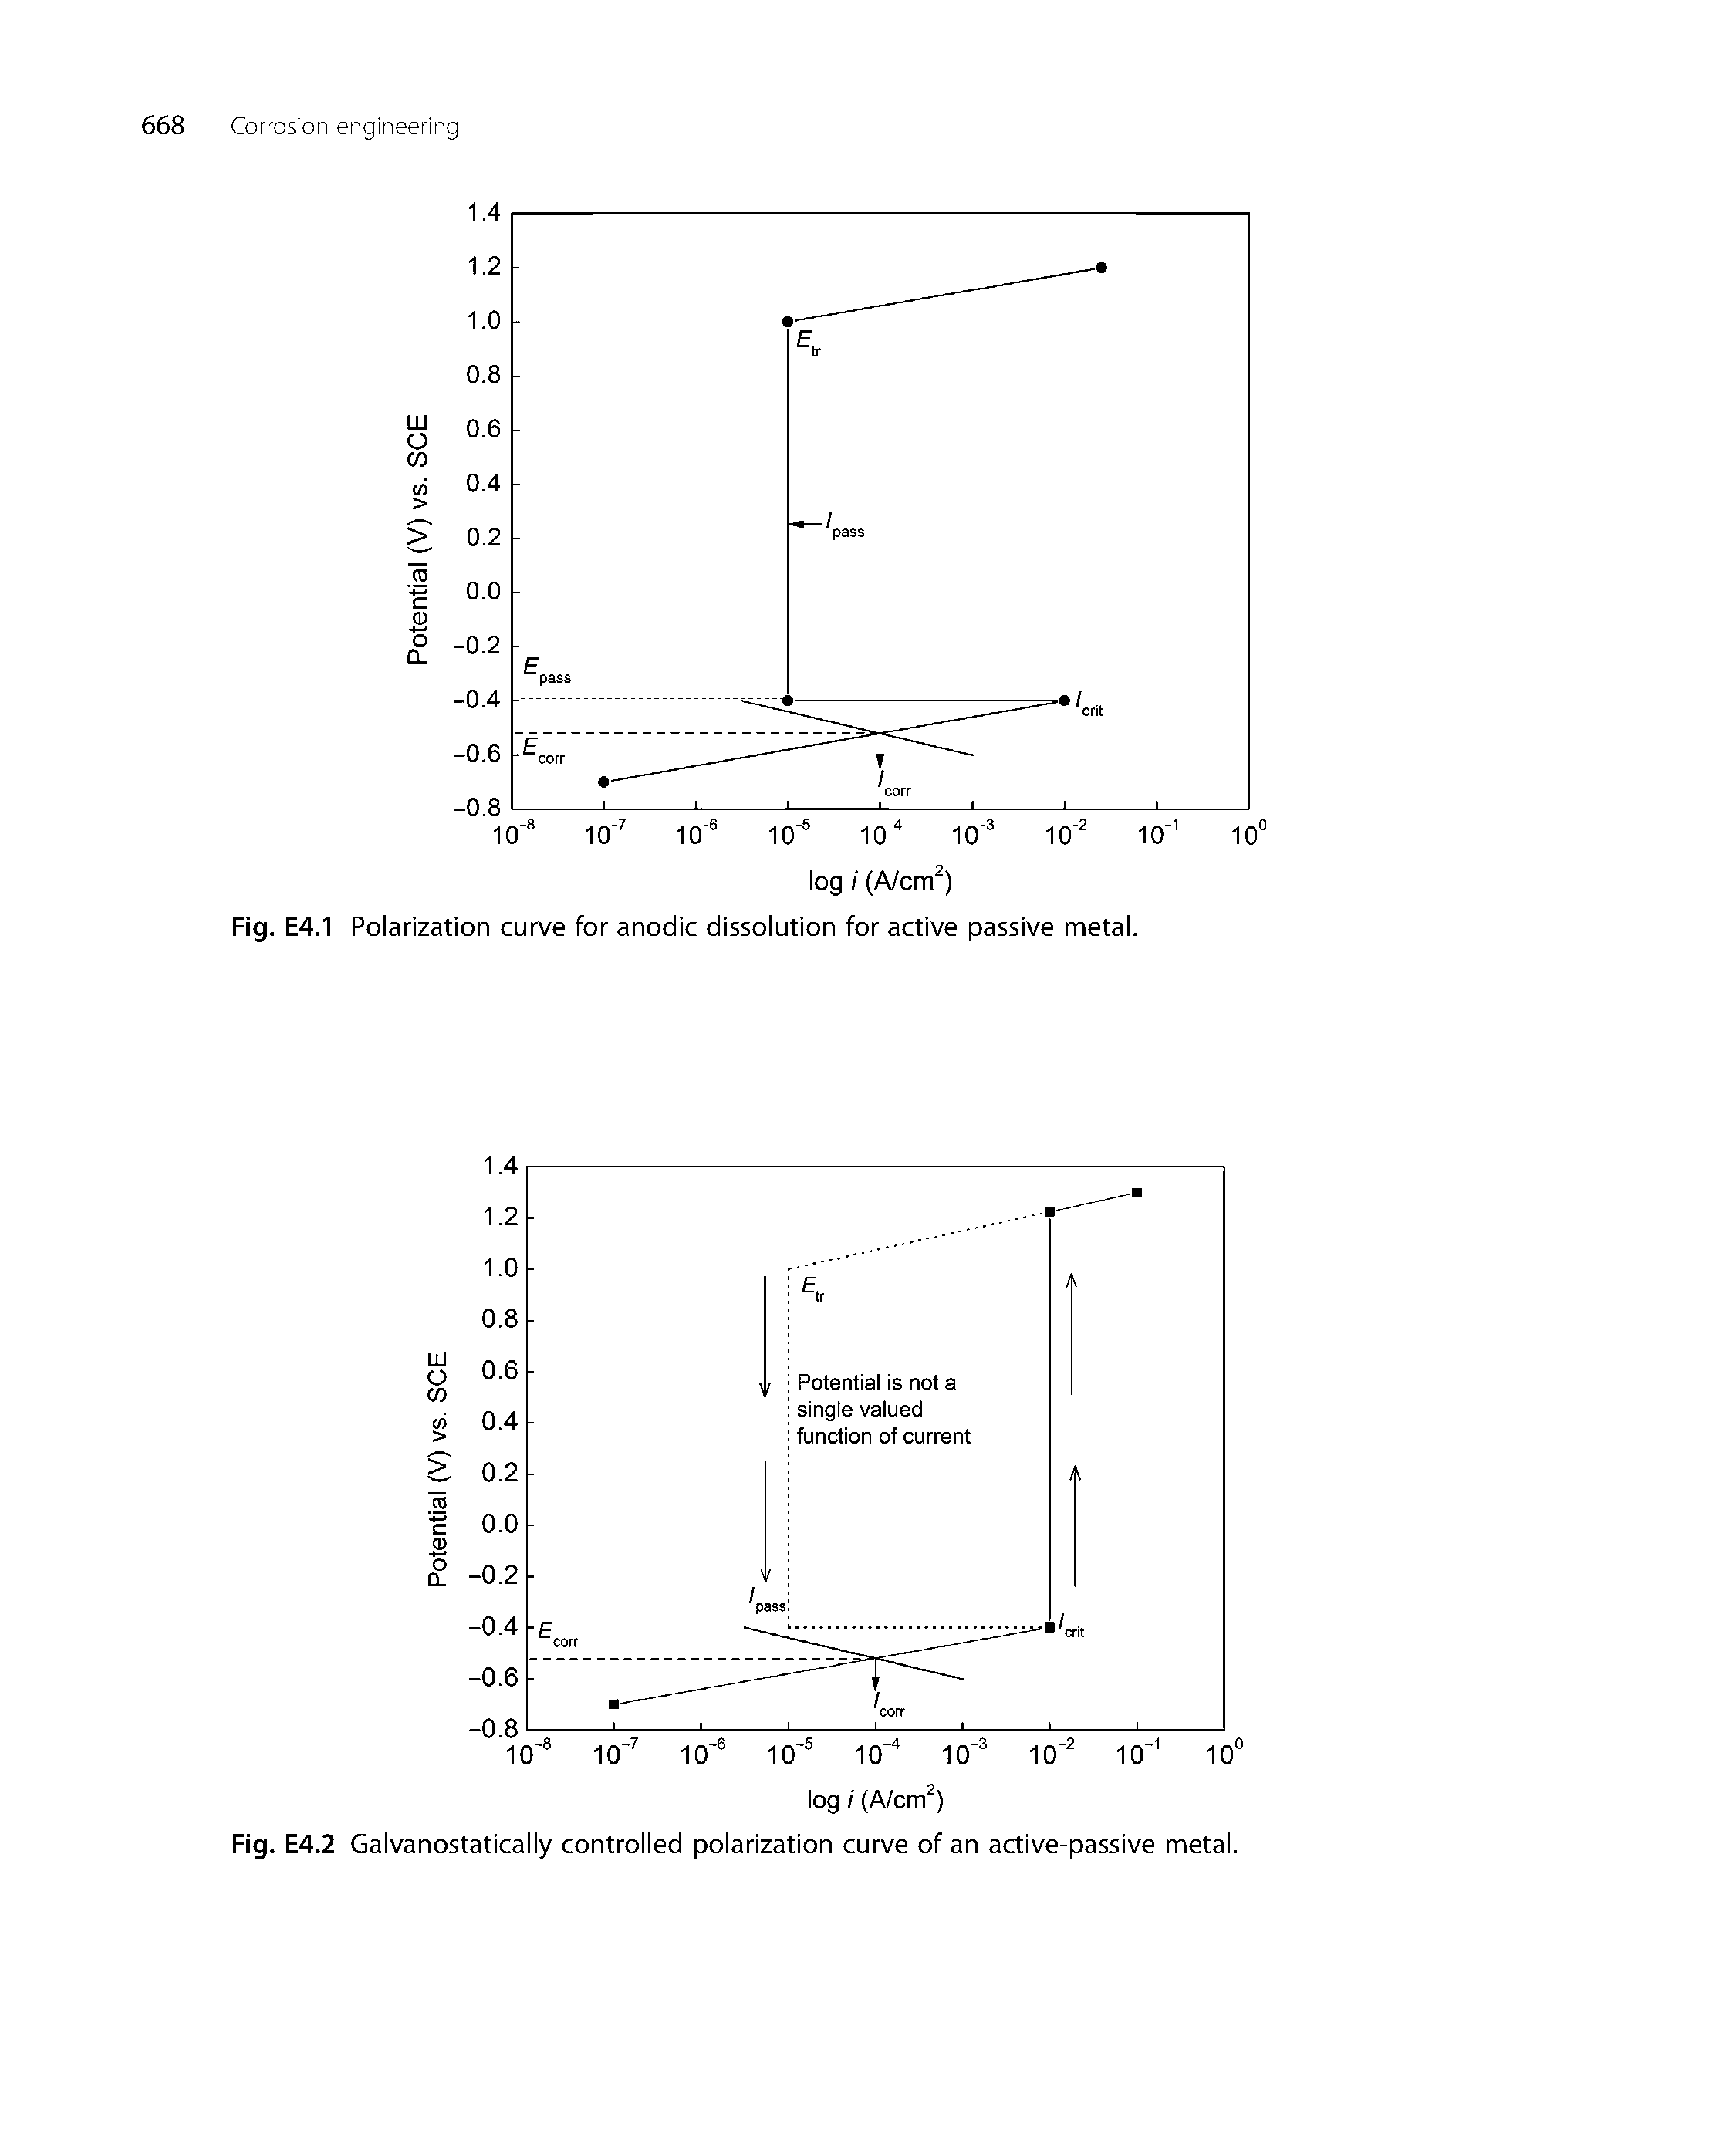 Fig. E4.1 Polarization curve for anodic dissolution for active passive metal.